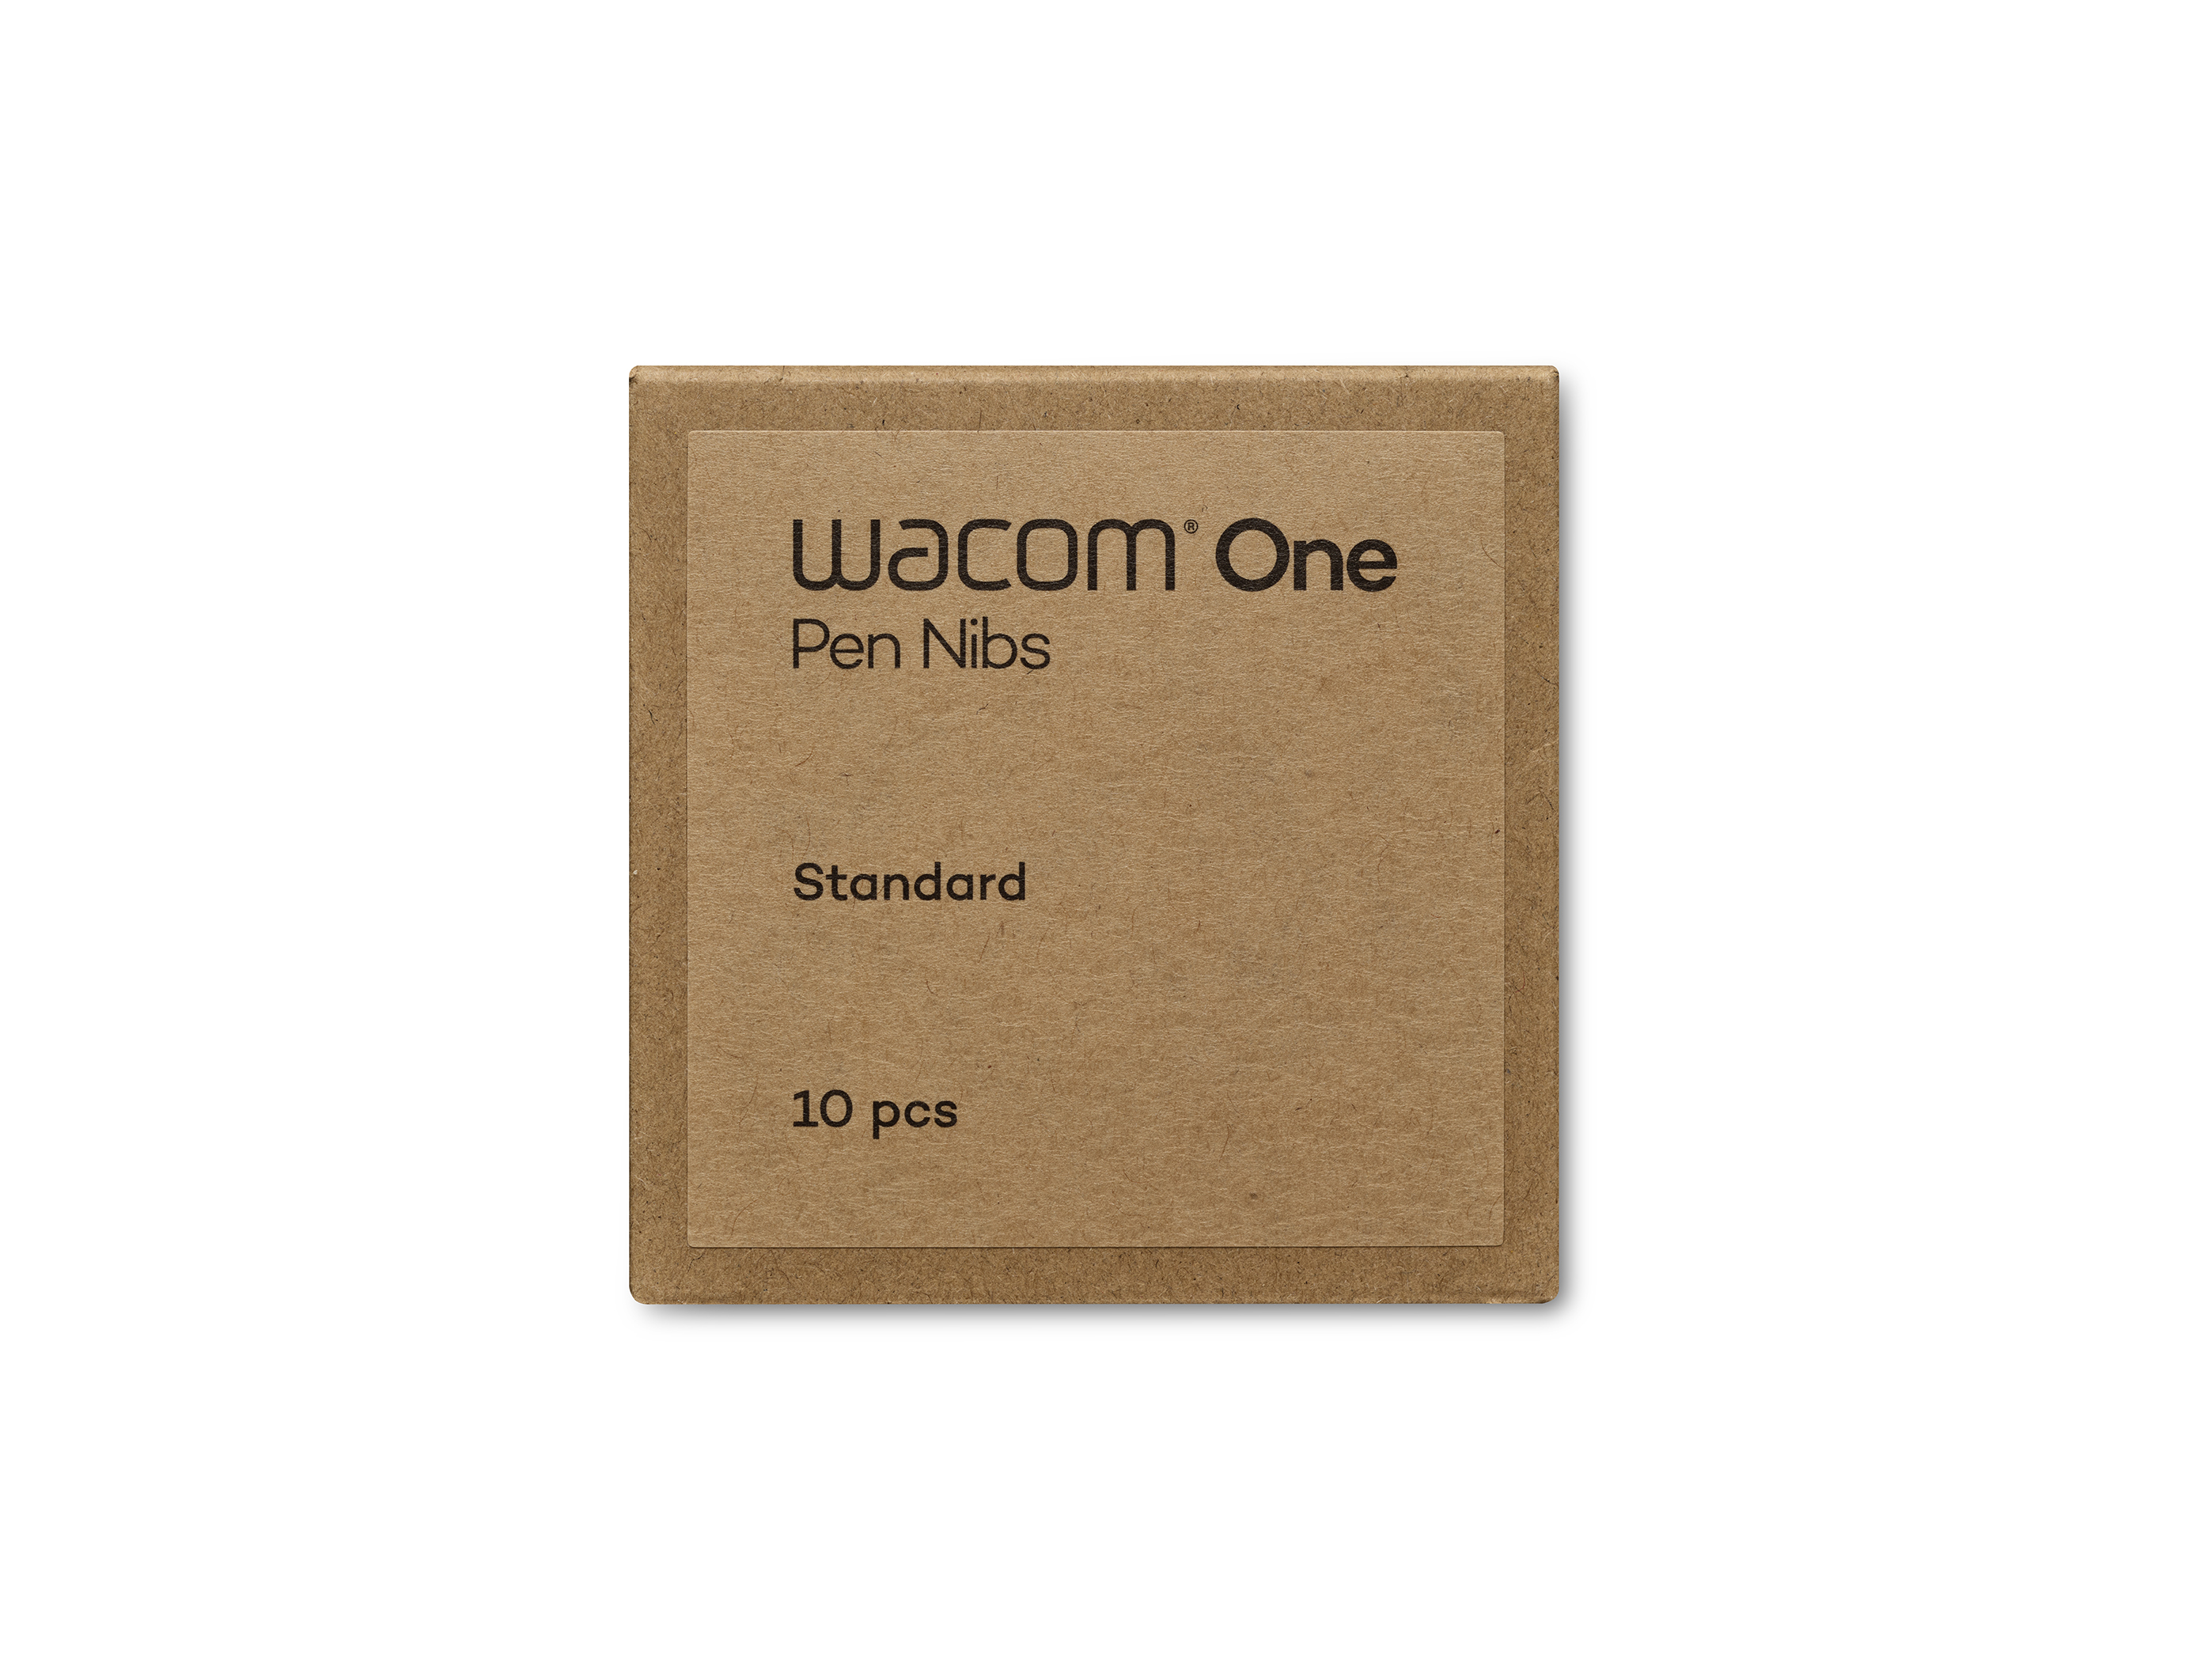 Wacom One: creative pen display and pen tablet